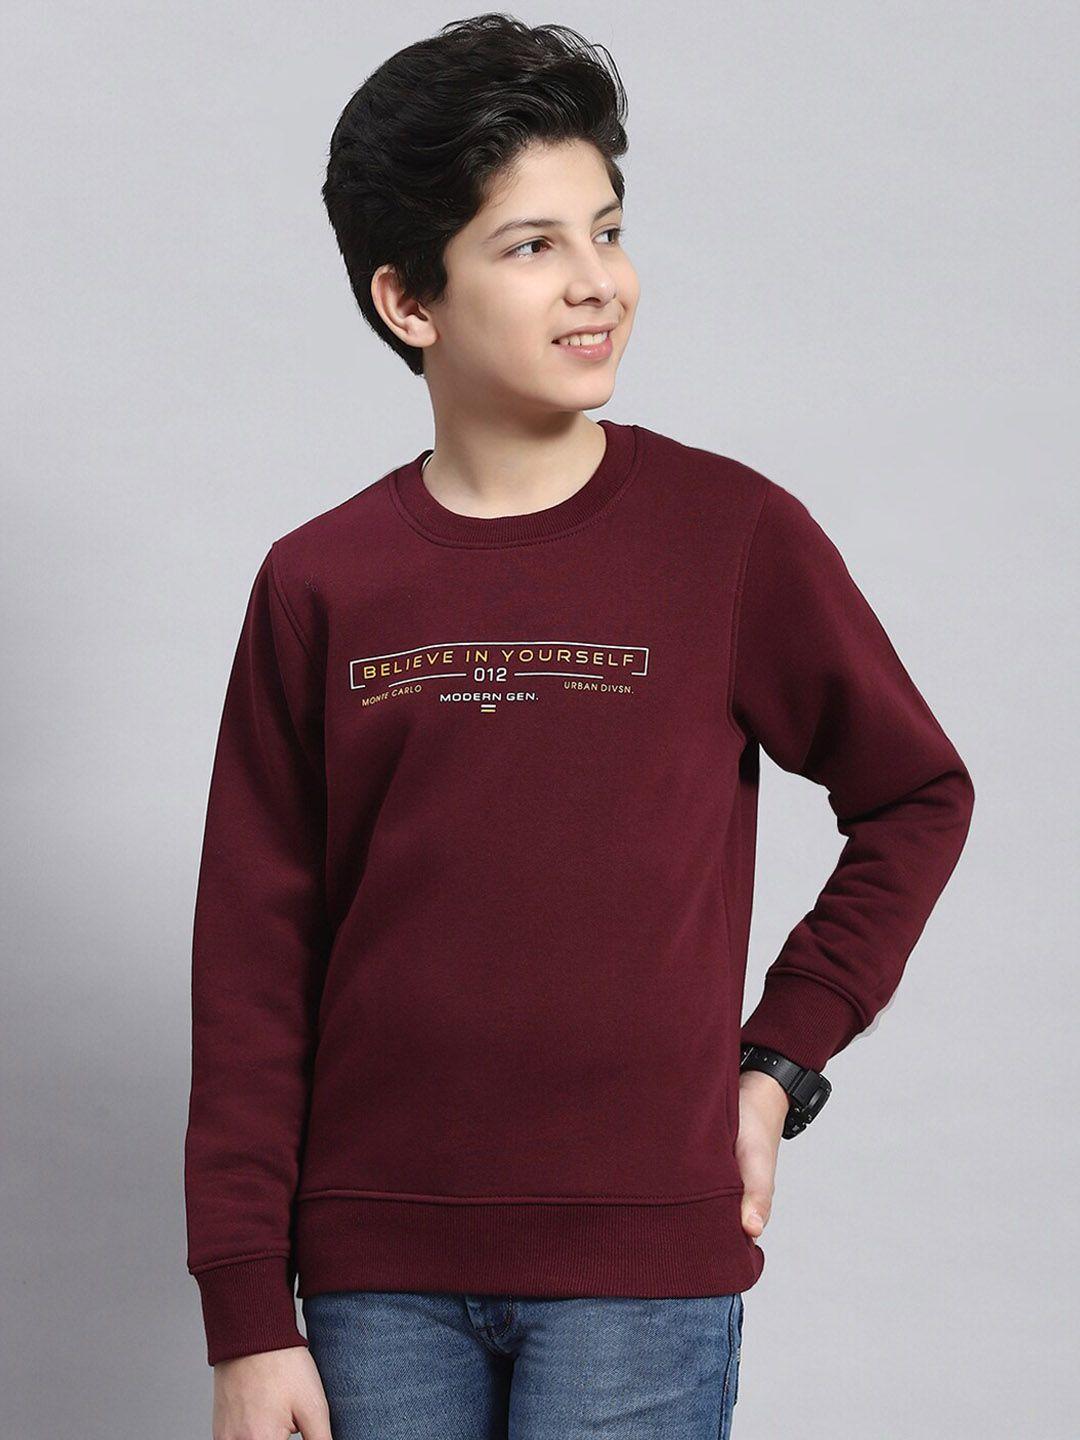 monte-carlo-boys-typography-printed-long-sleeve-pullover-sweatshirt